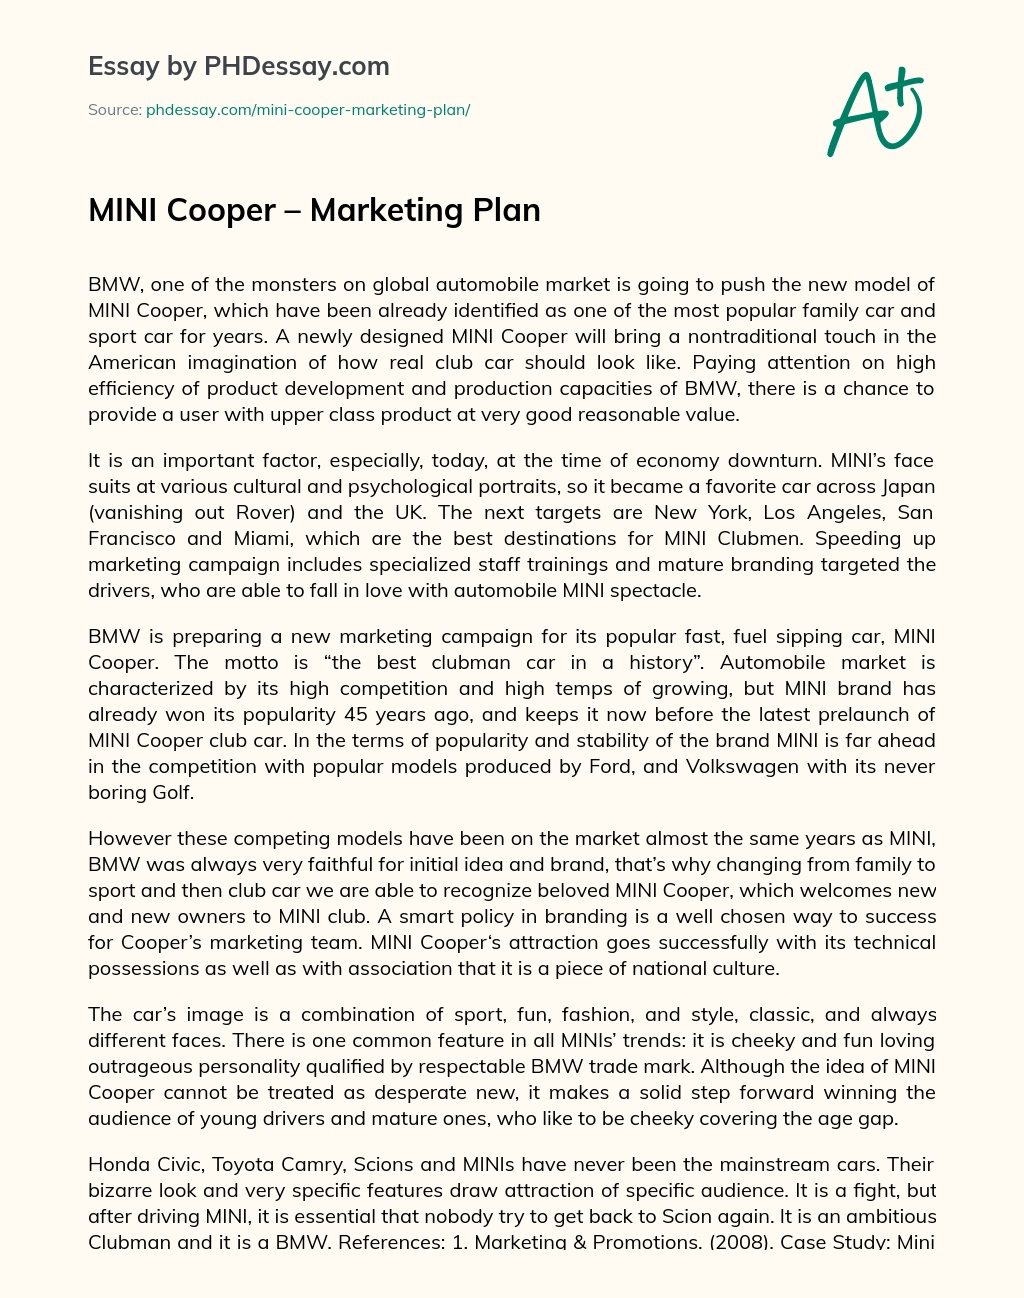 MINI Cooper – Marketing Plan essay